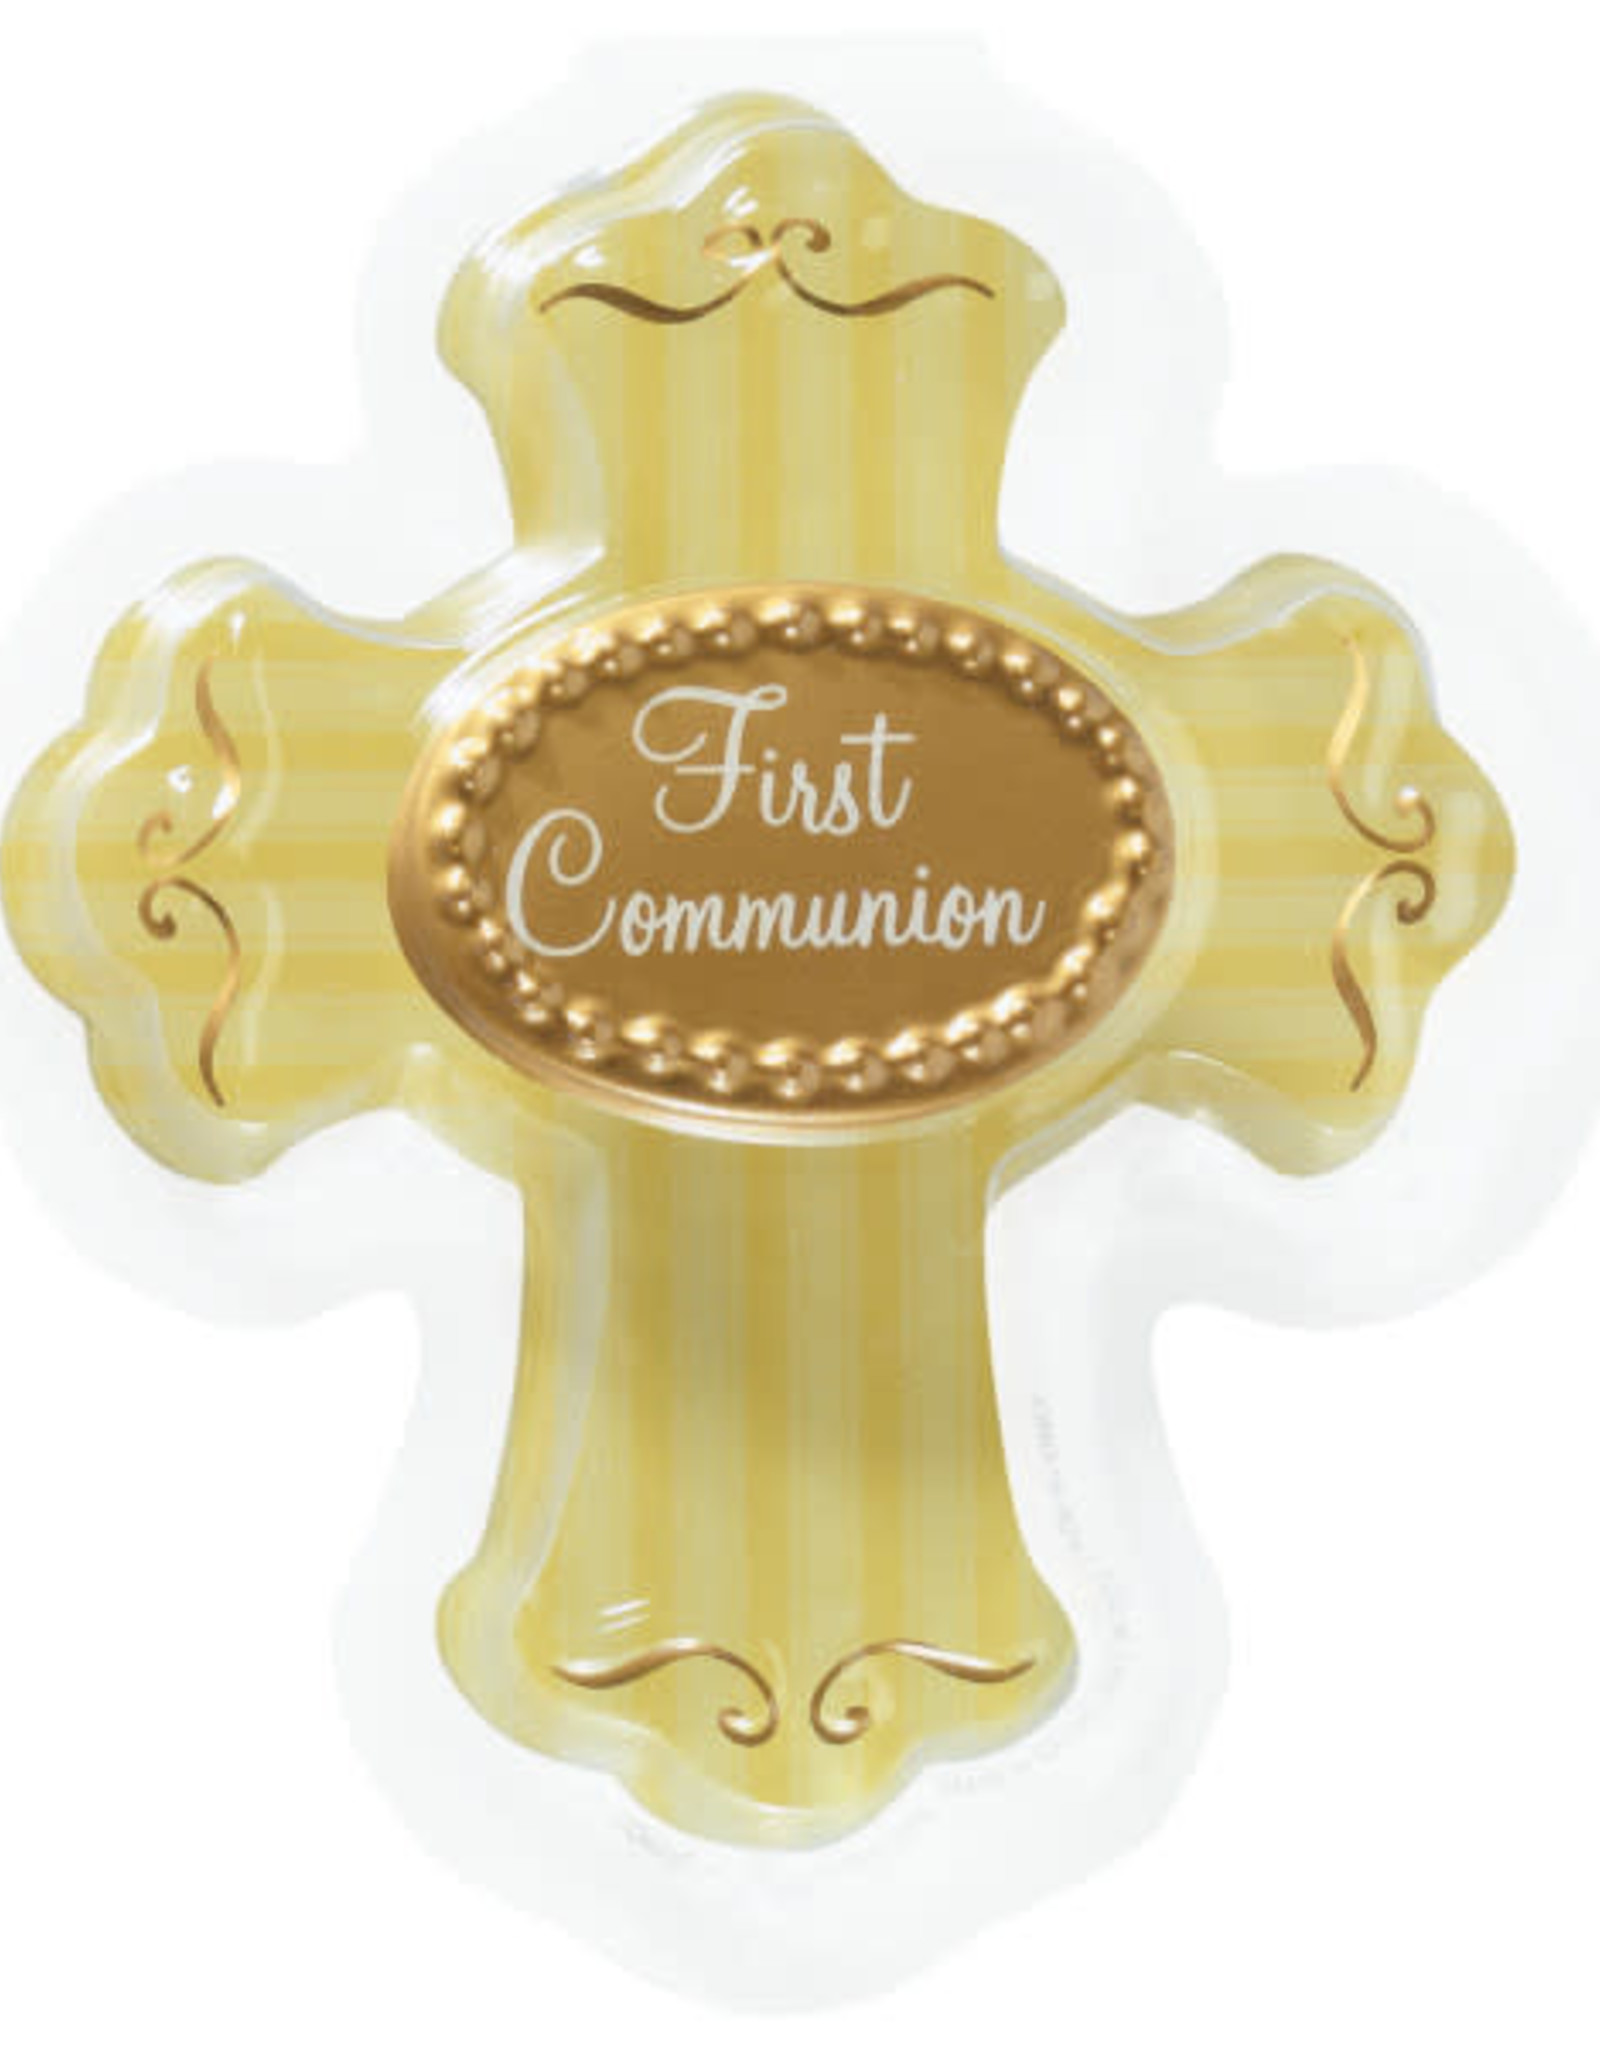 First Communion Cross Cake Topper